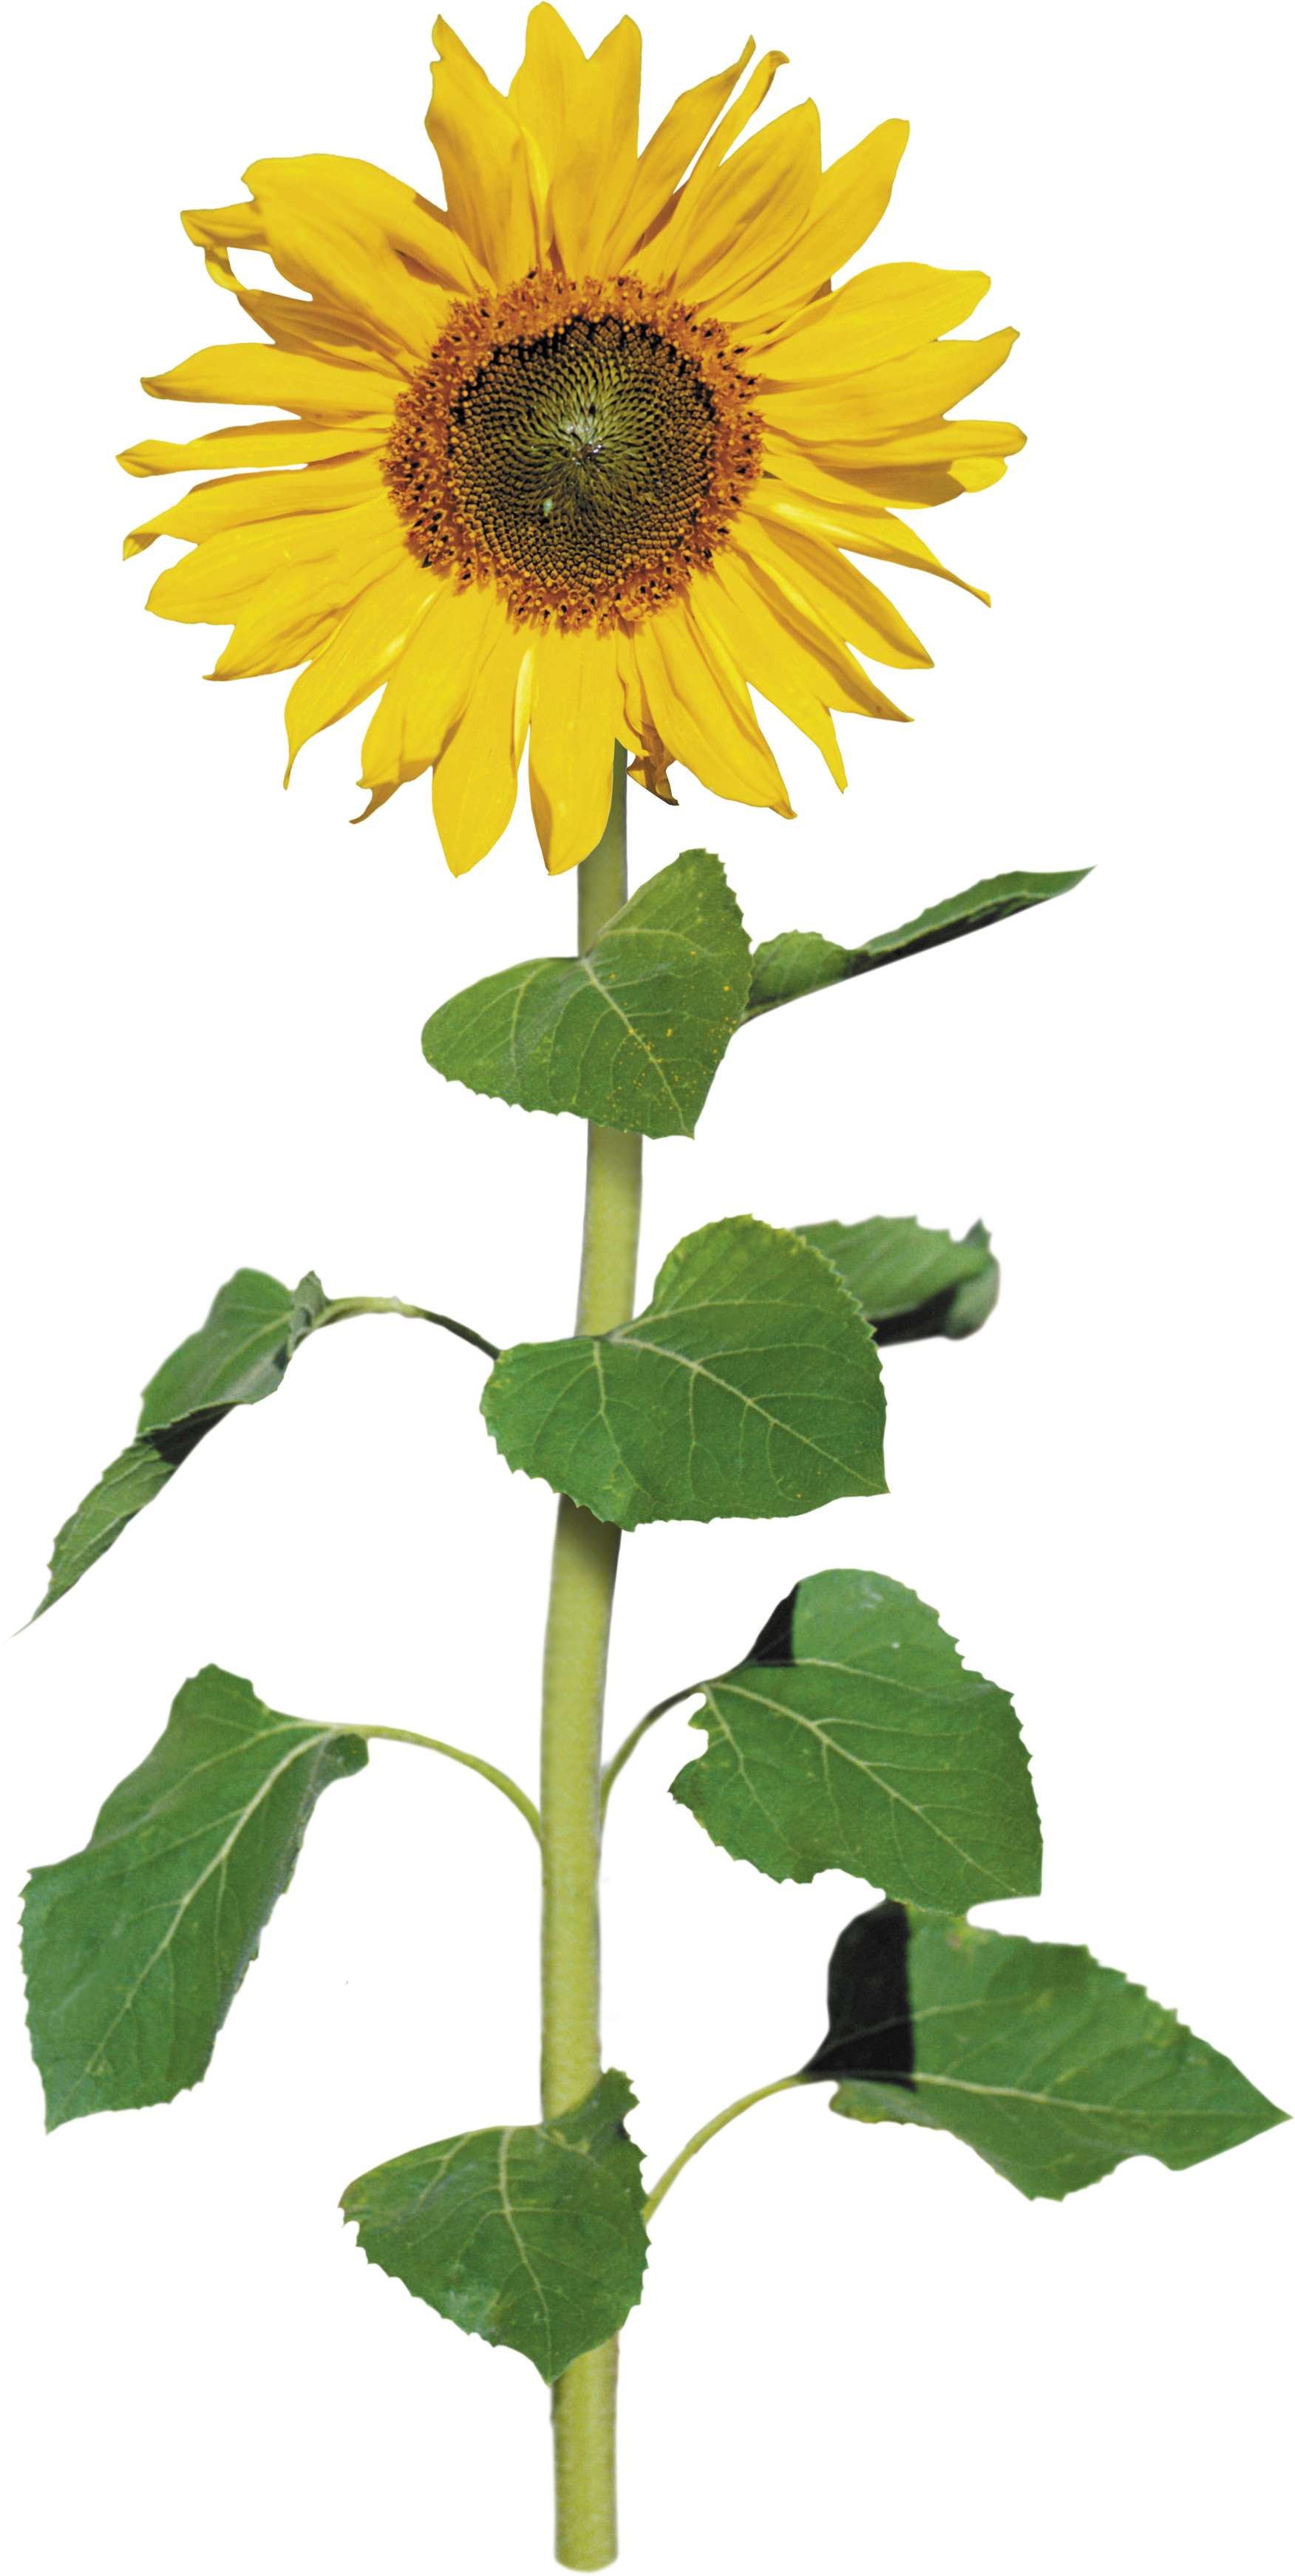 Common Sunflower Archive File Clip Art - Common Sunflower Archive File Clip Art (1752x3486)